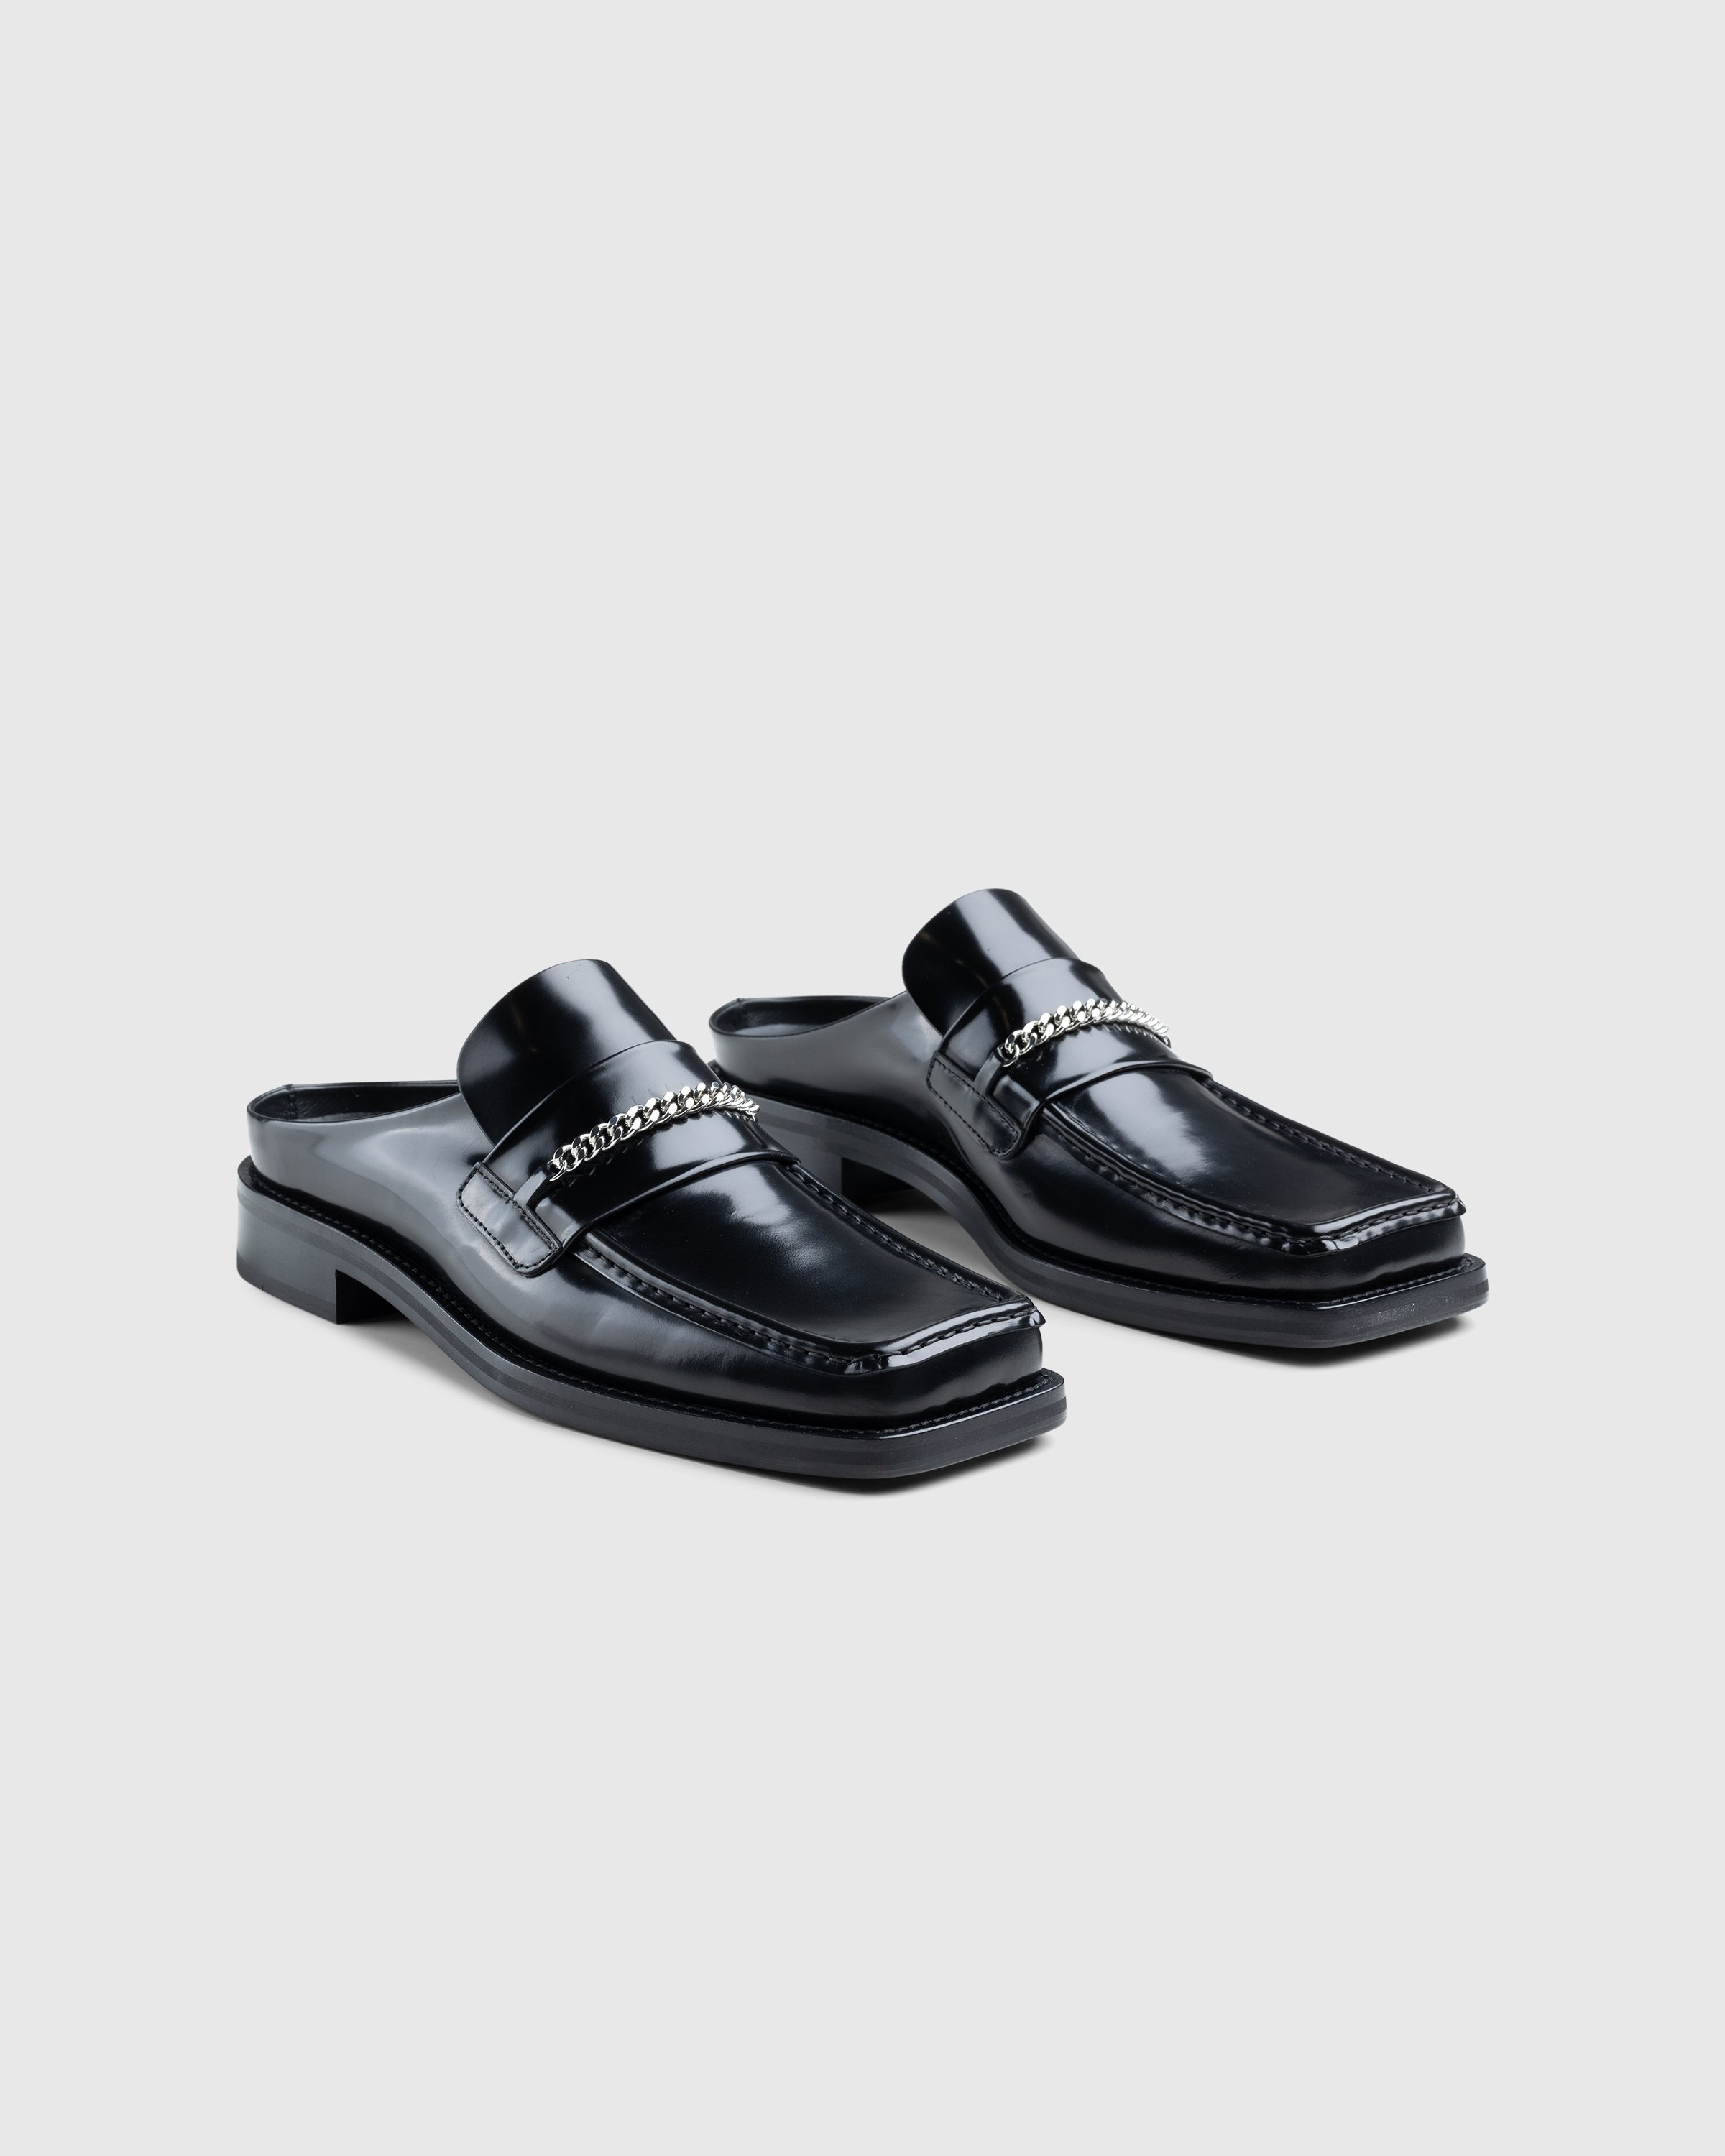 Martine Rose - Square Toe Mule Black High Shine - Footwear - Black - Image 3